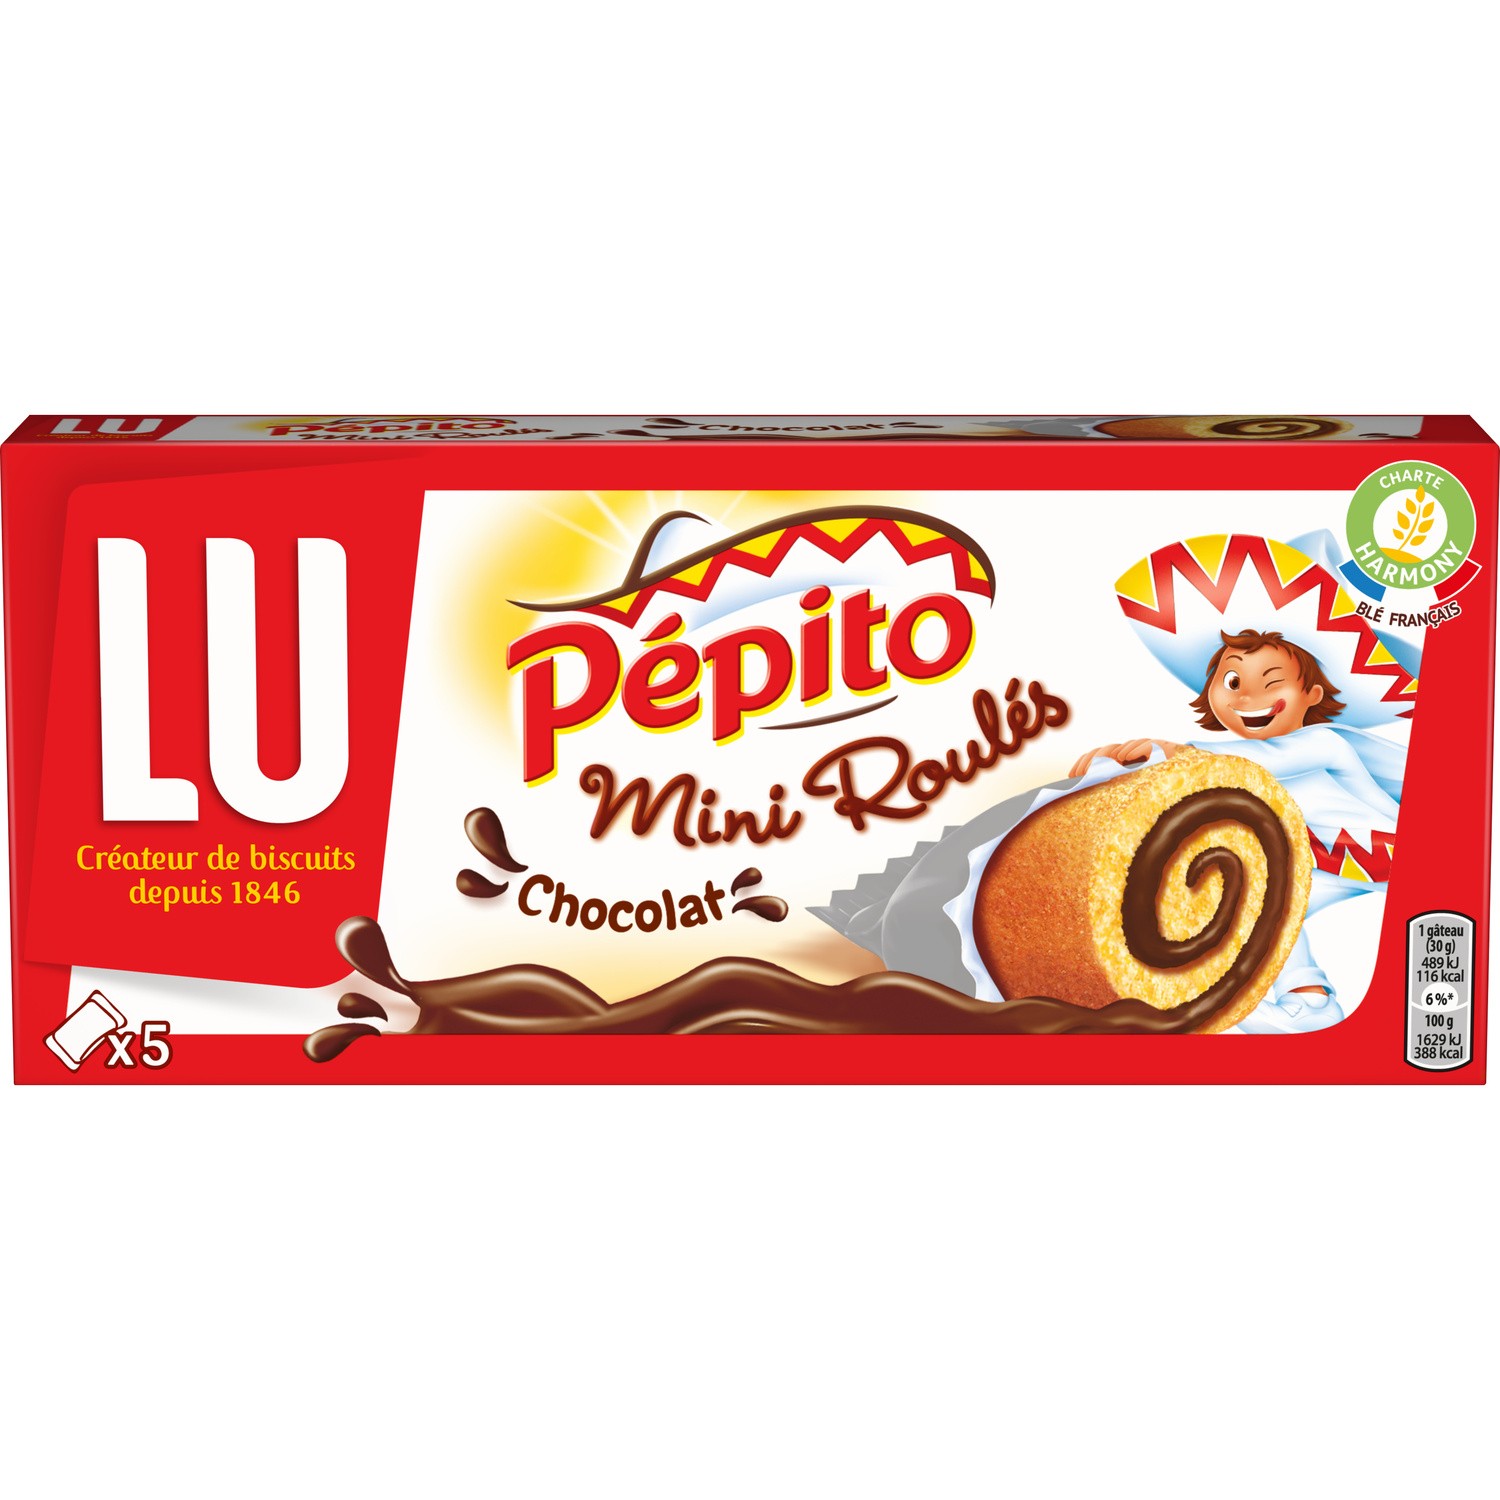 Mini roule chocolat pepito